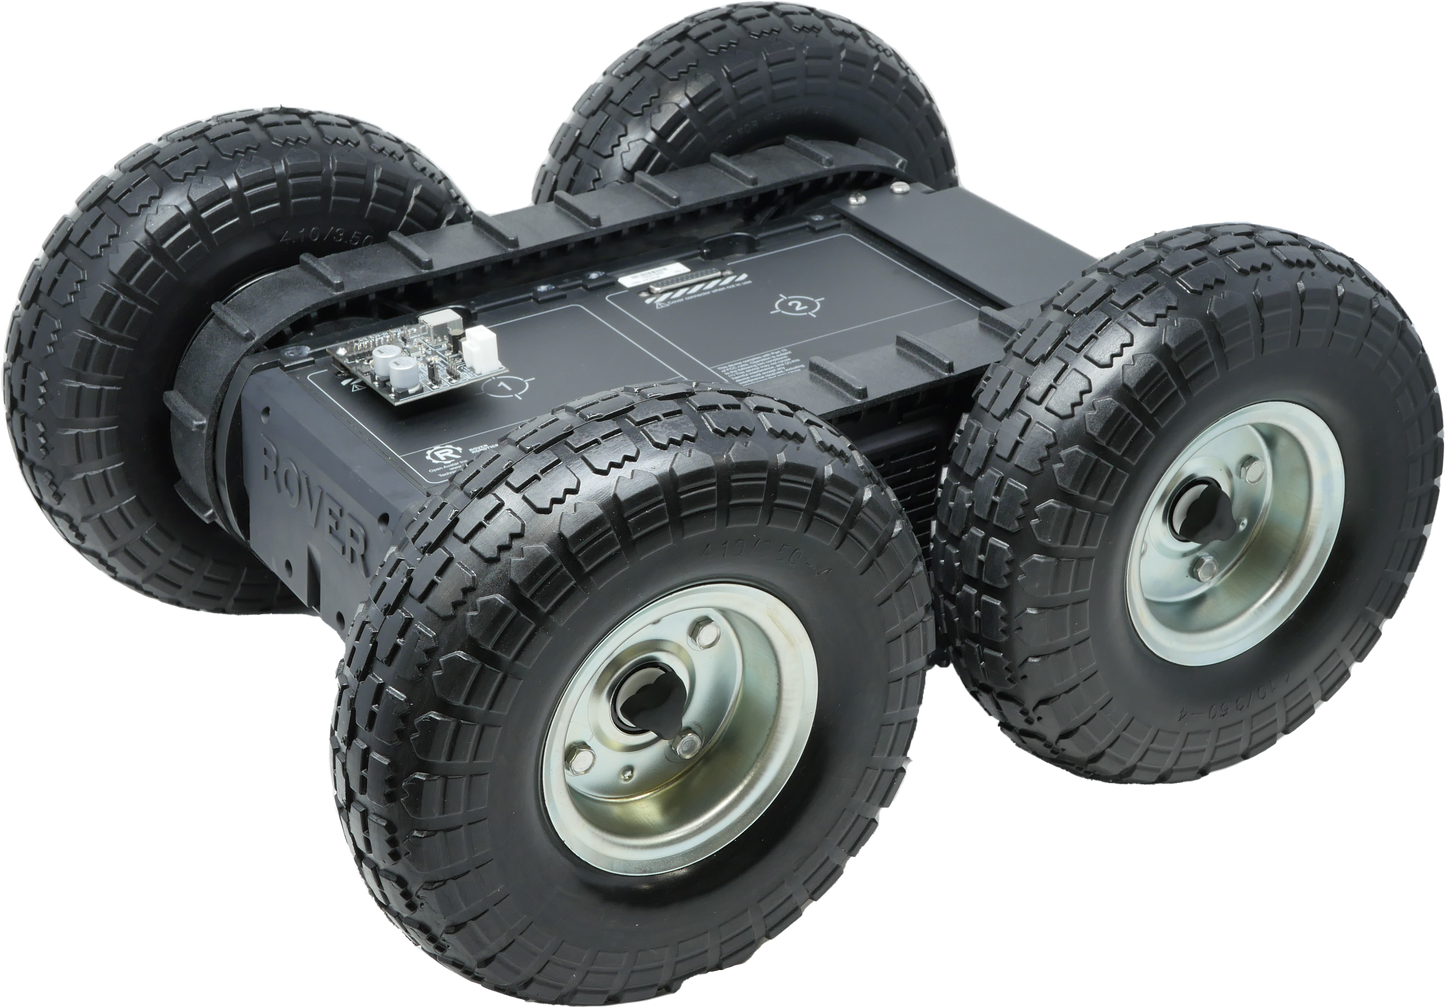 4WD Rover Pro - Rover Robotics, Inc.